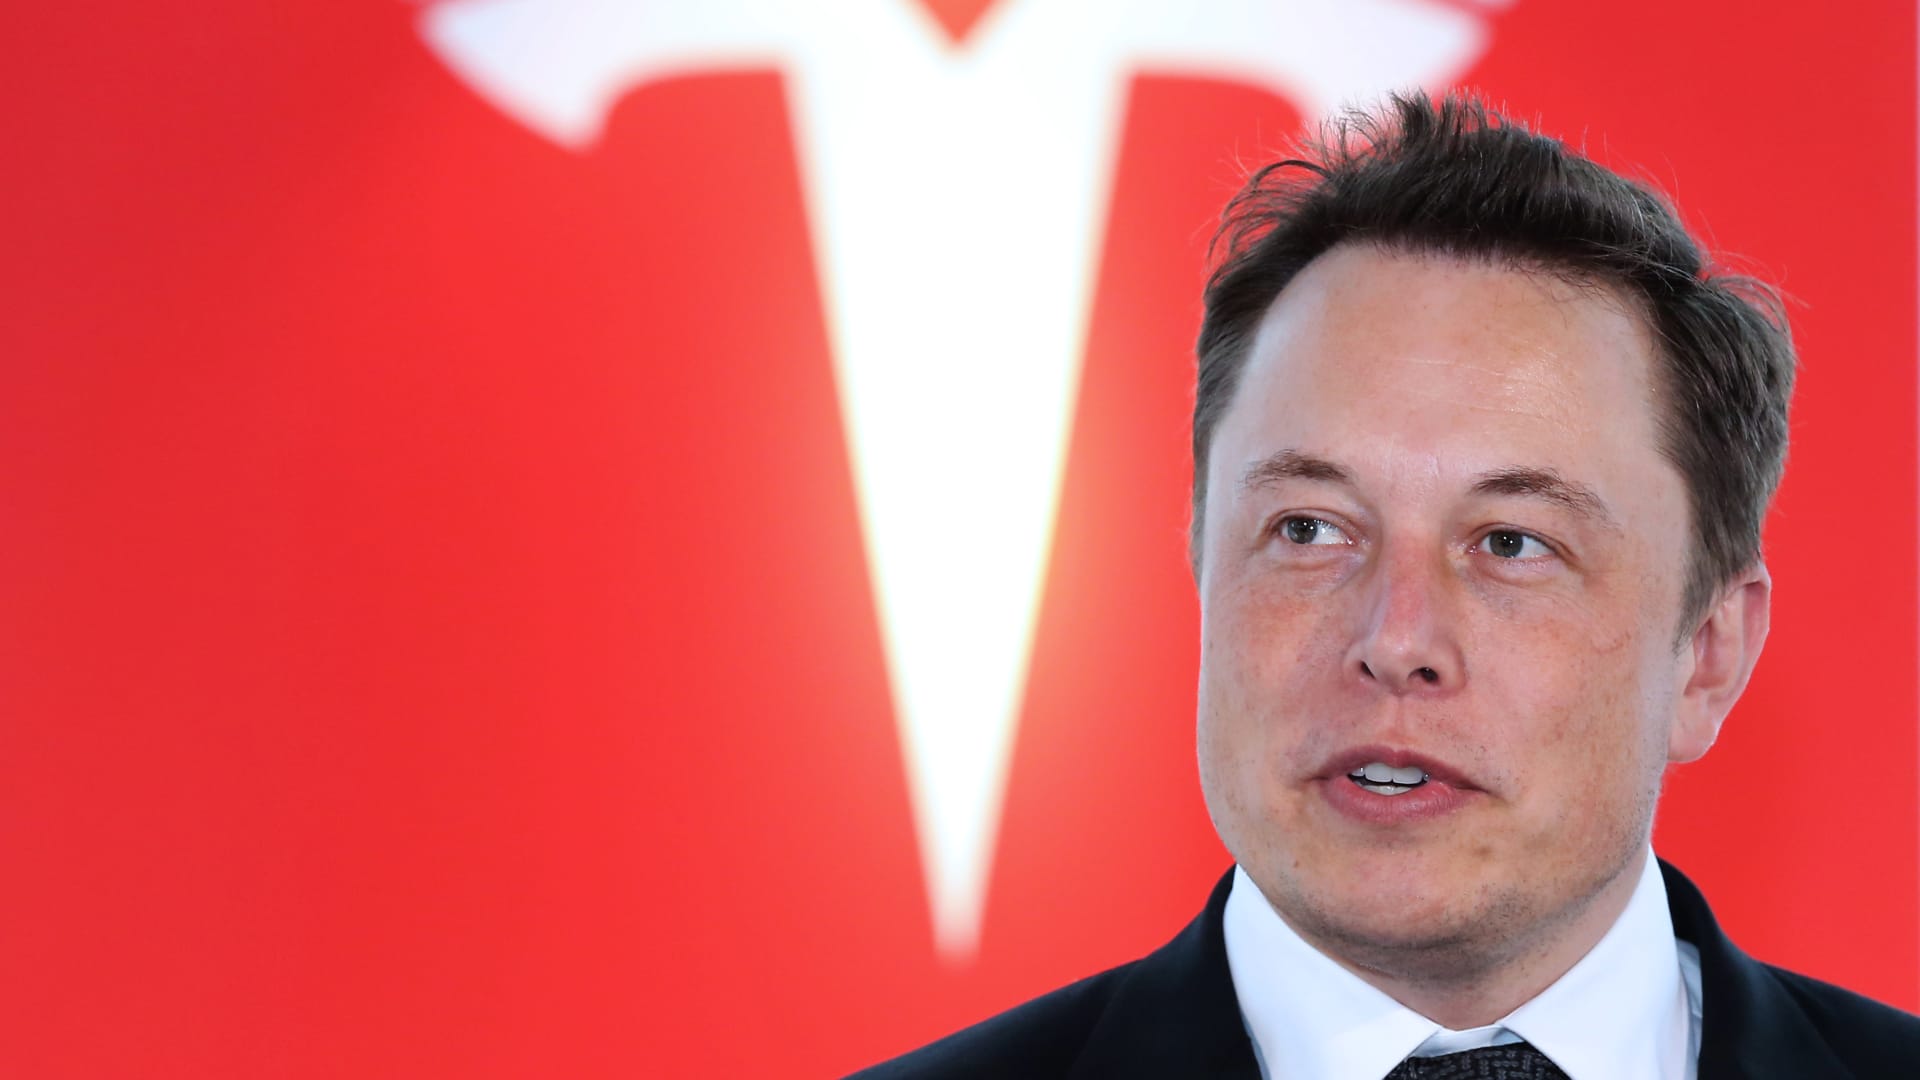 Elon Musk blasts Biden administration, Democrats on Twitter over 'hate,' sidelining of Tesla